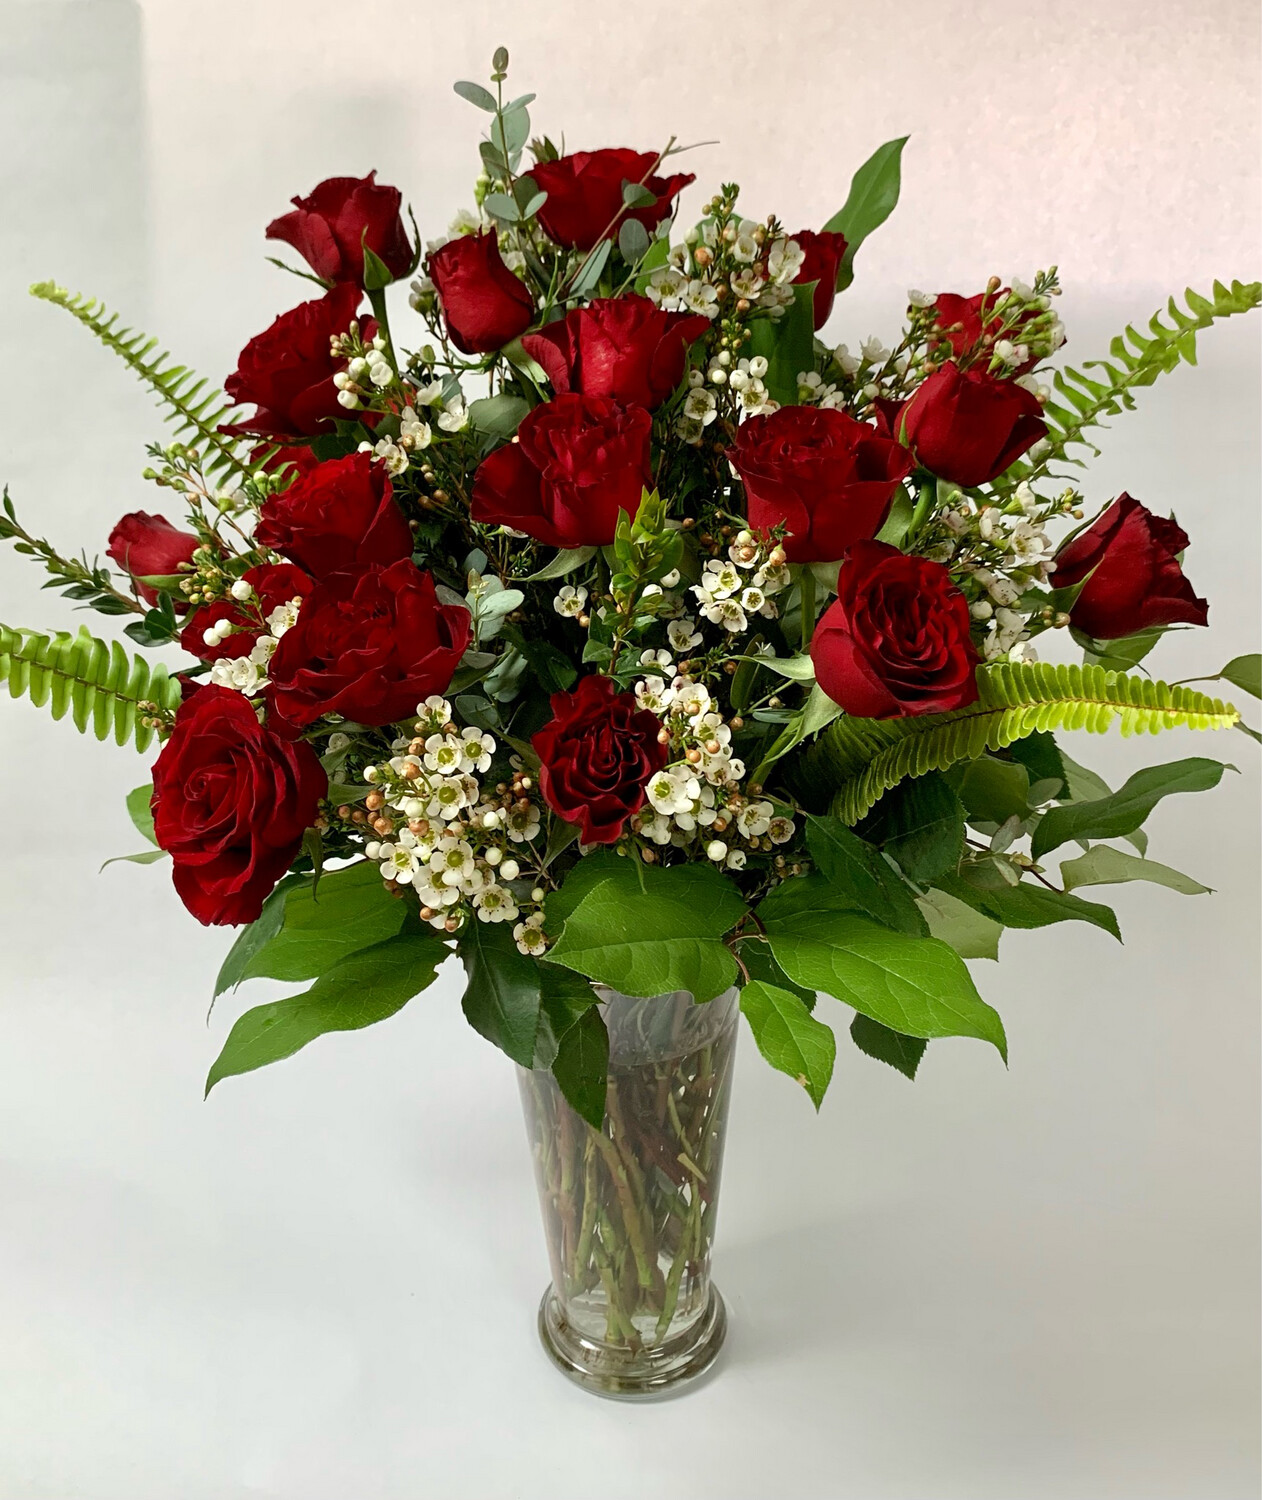 4 Dozen Fresh Roses Arranged  in a Vase with Filler